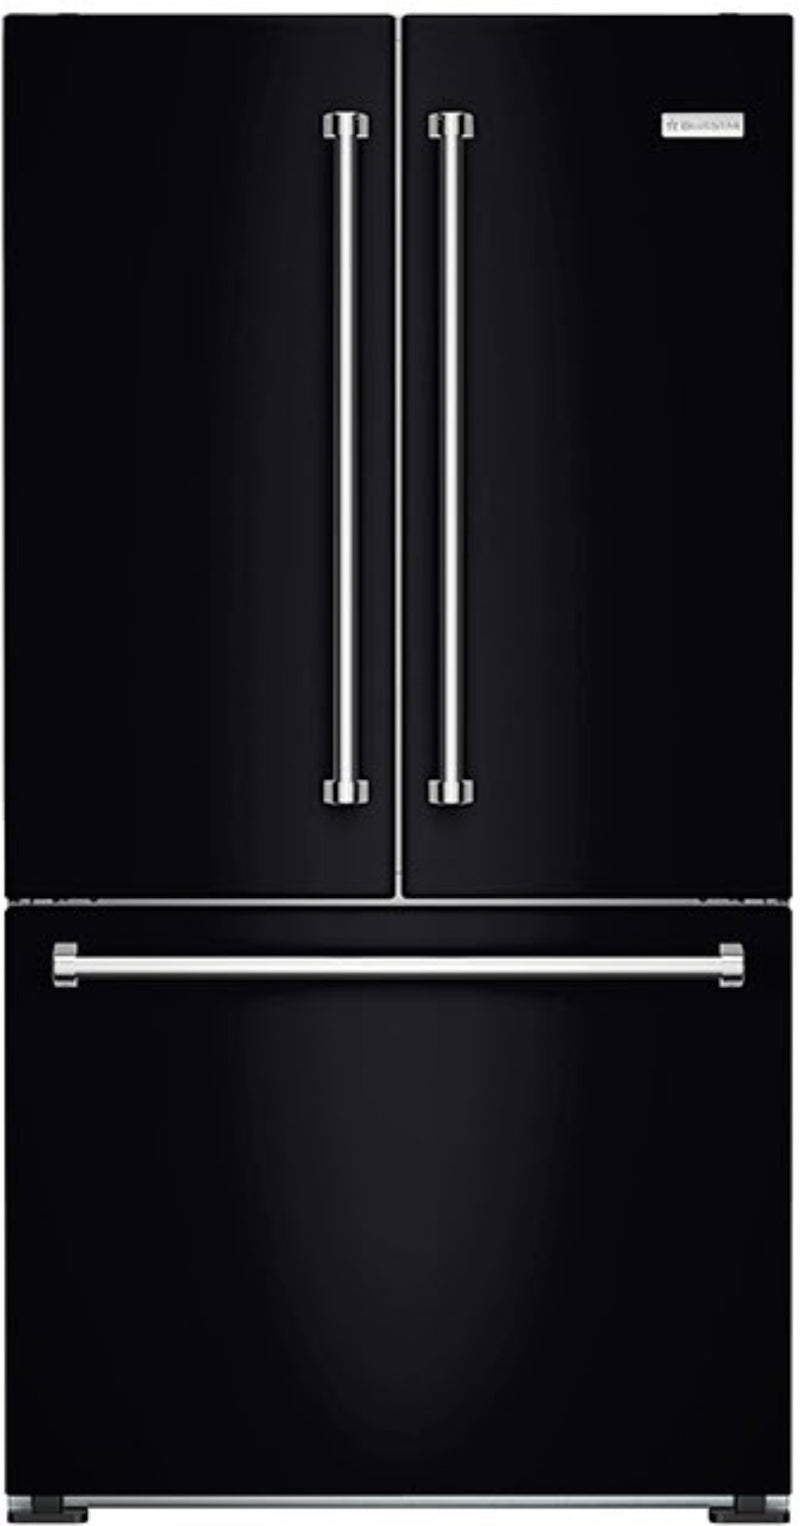 Bluestar - 35.8 Inch 19.86 cu. ft French Door Refrigerator in Black - FBFD361PMB